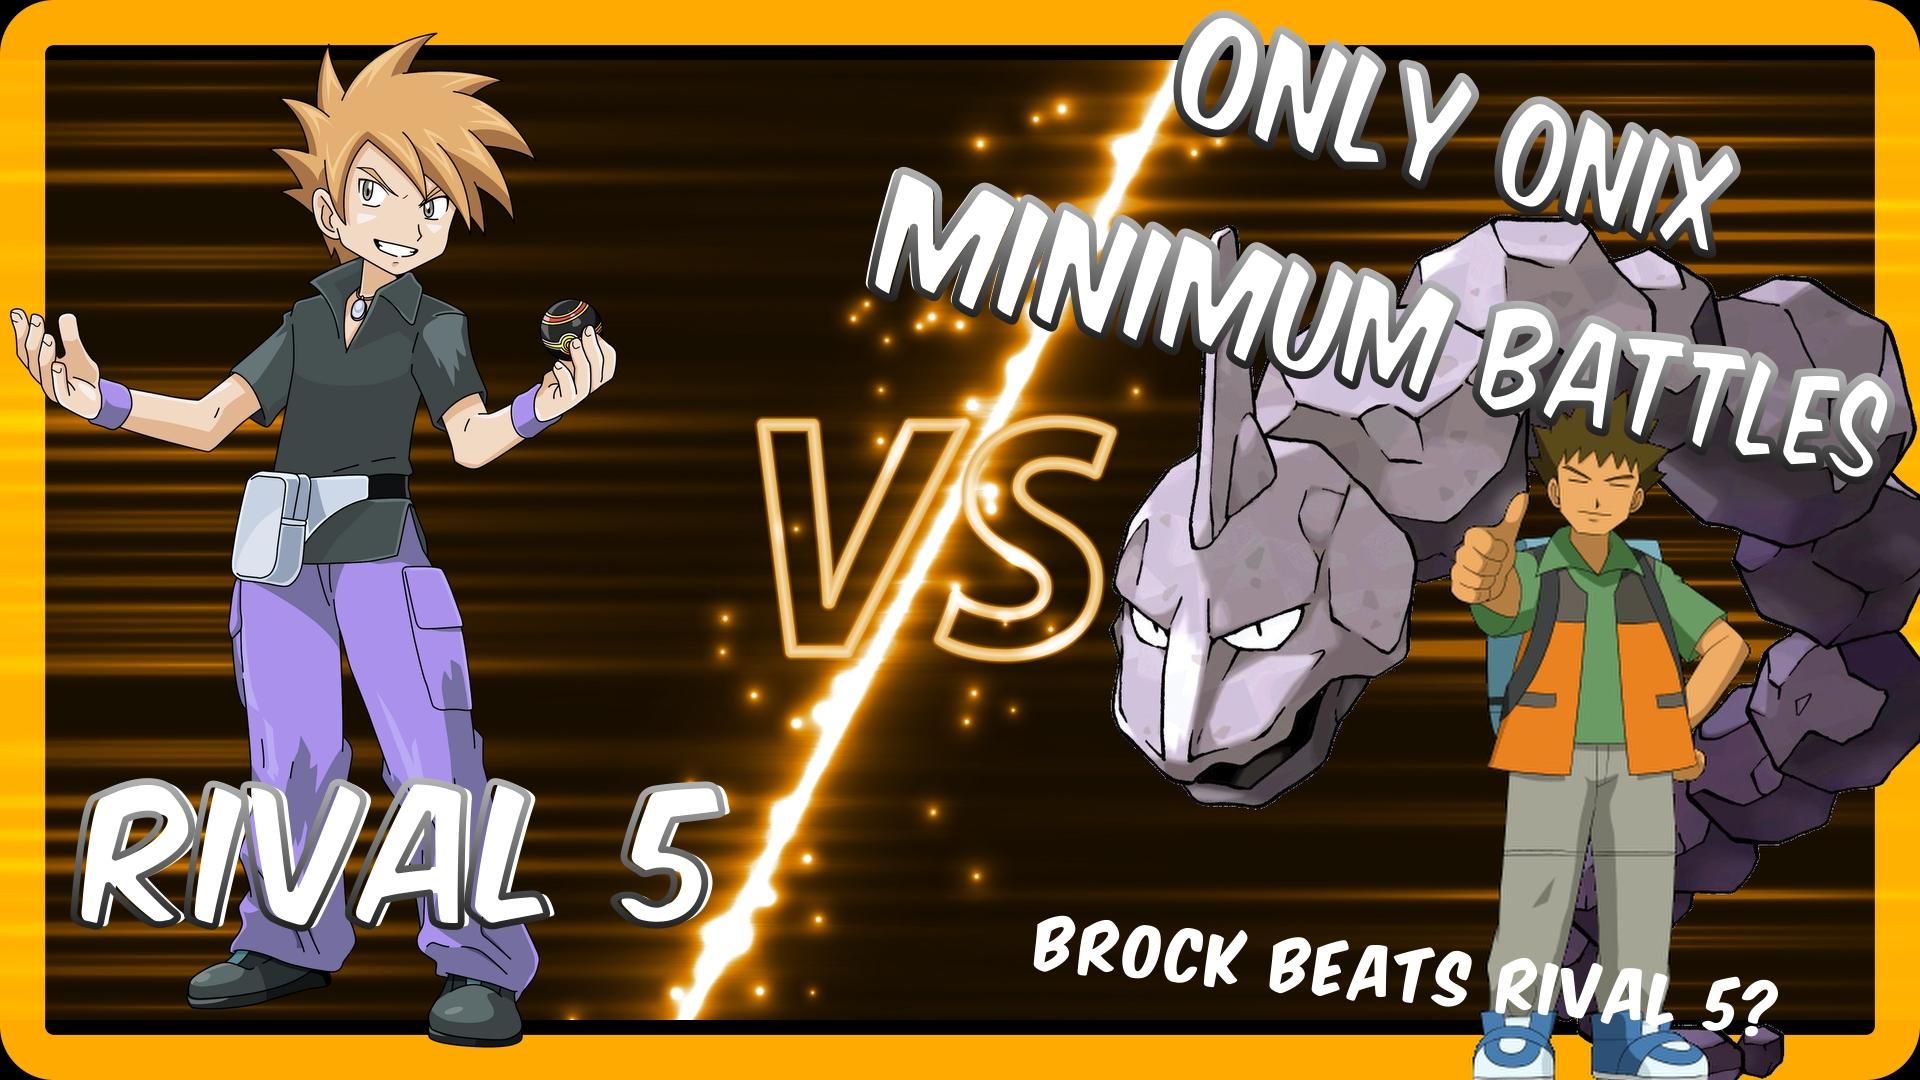 Onix - Could Brock Beat Rival 5? #MinimumBattles